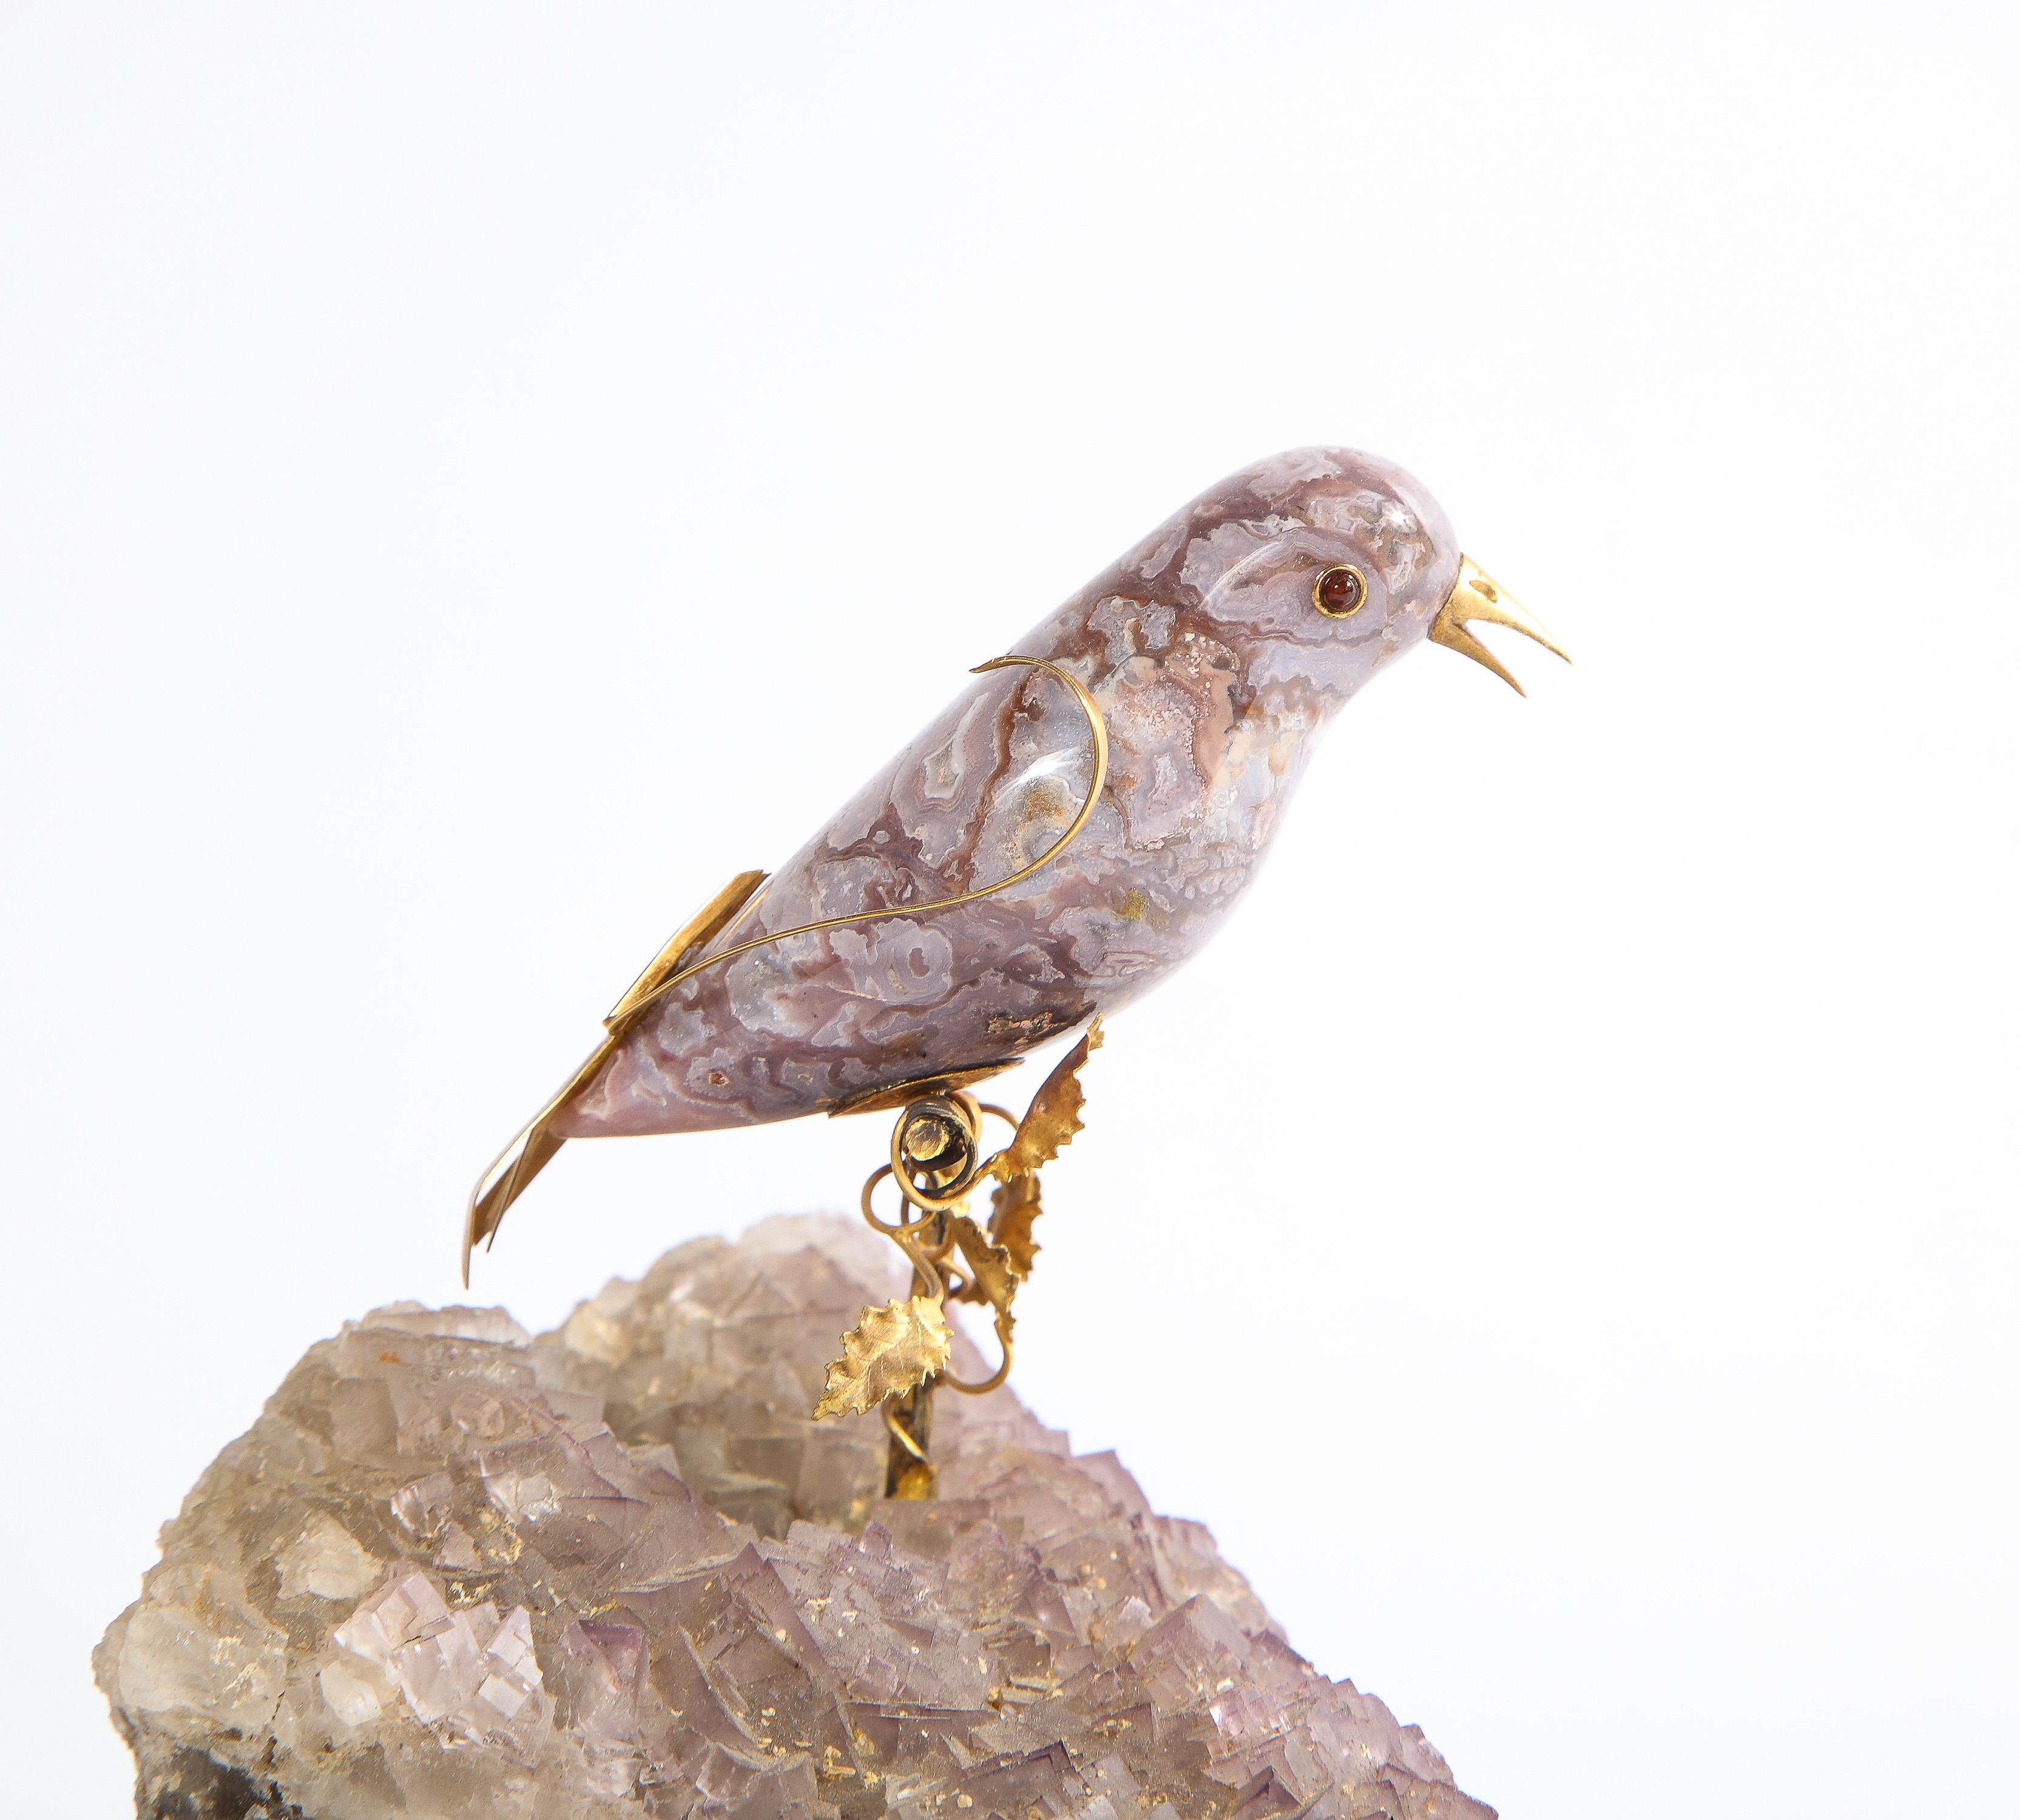 14k Gold Mounted Agate Bird on Fluorite Stone, Mounted on Black Glass 5